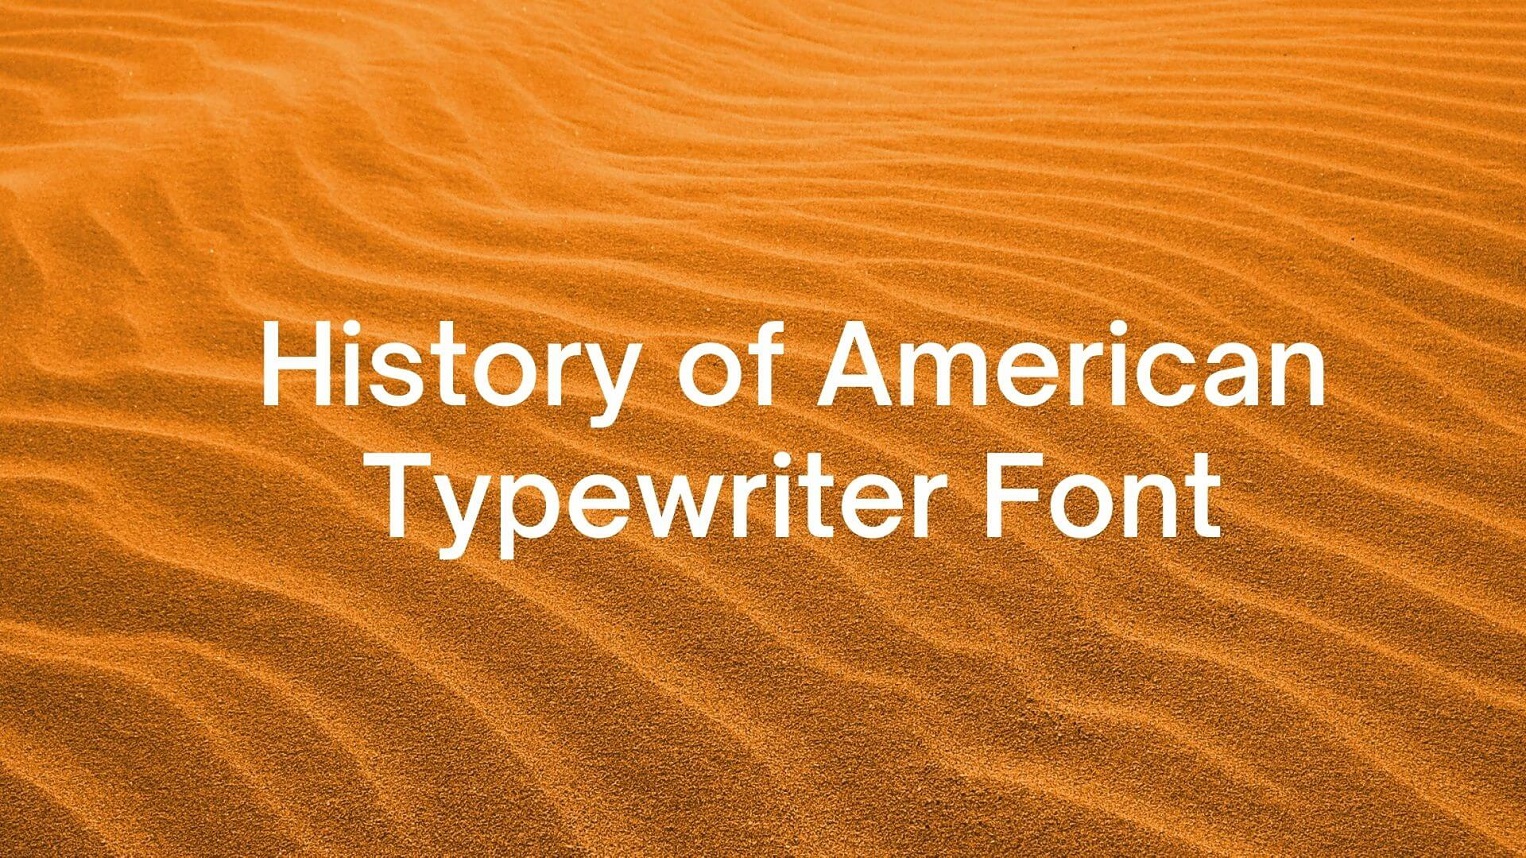 History of American Typewriter Font